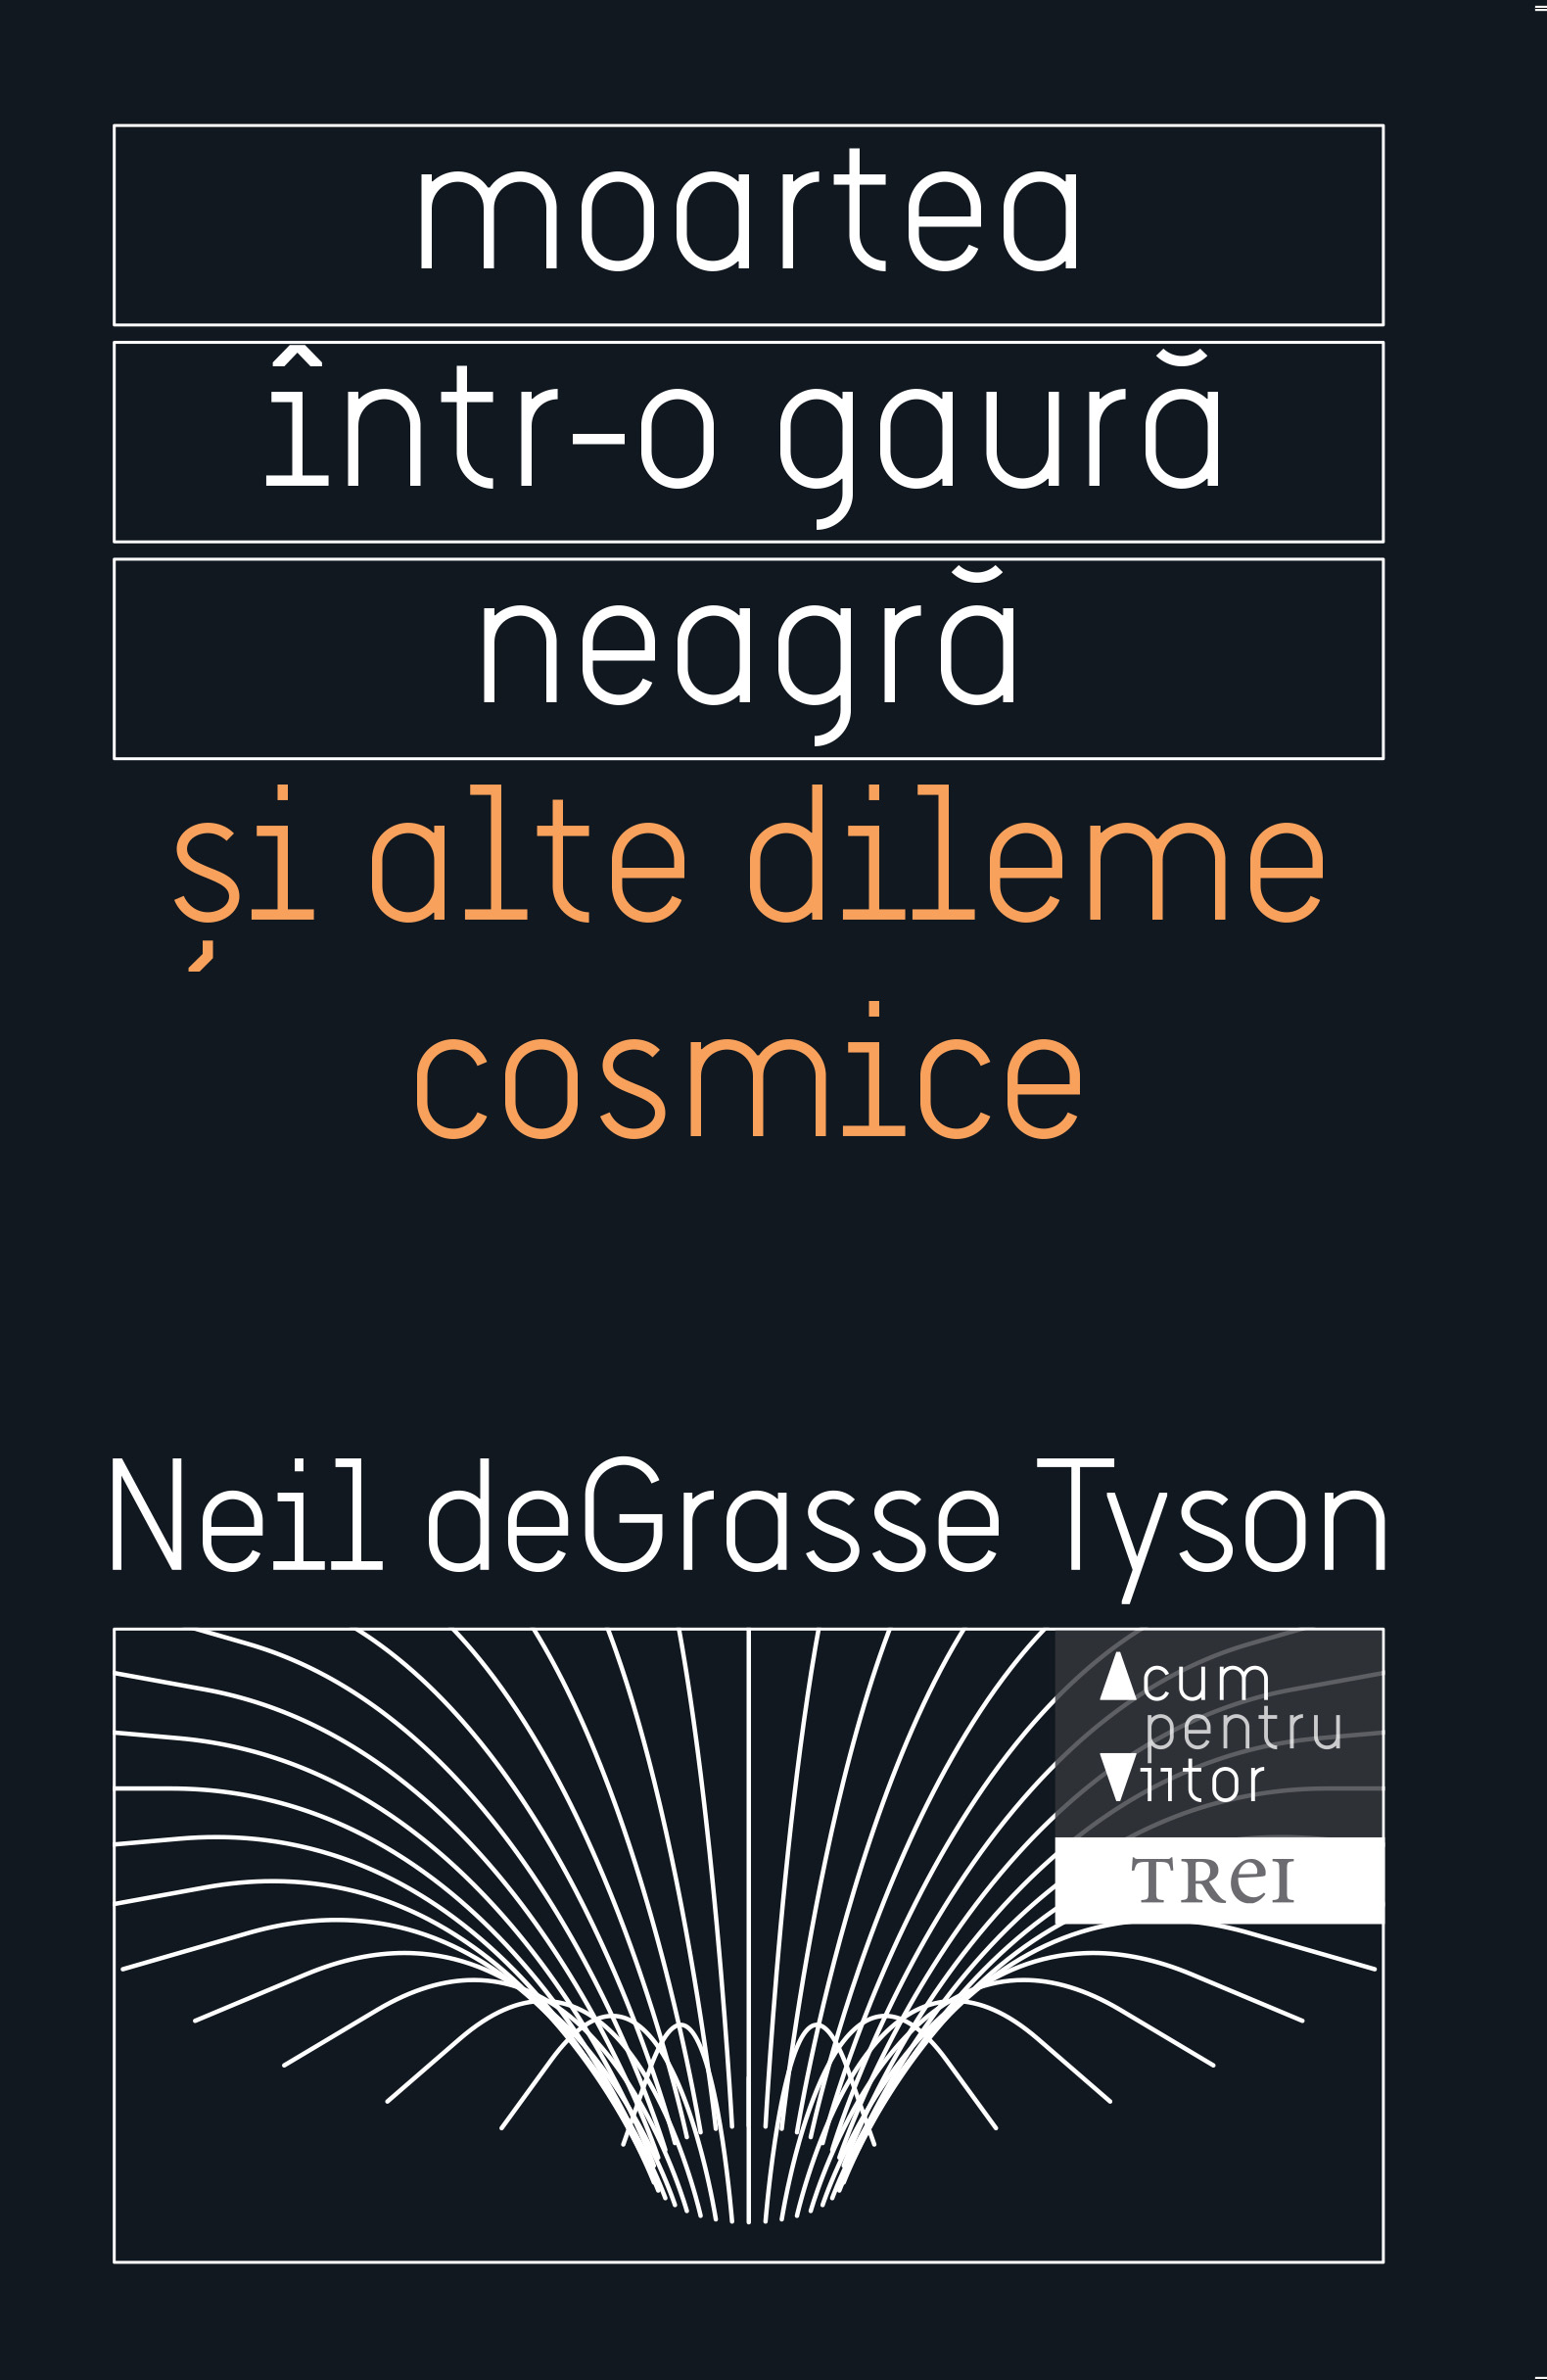 Moartea intr-o gaura neagra si alte dileme cosmice | Neil deGrasse Tyson carturesti.ro poza bestsellers.ro